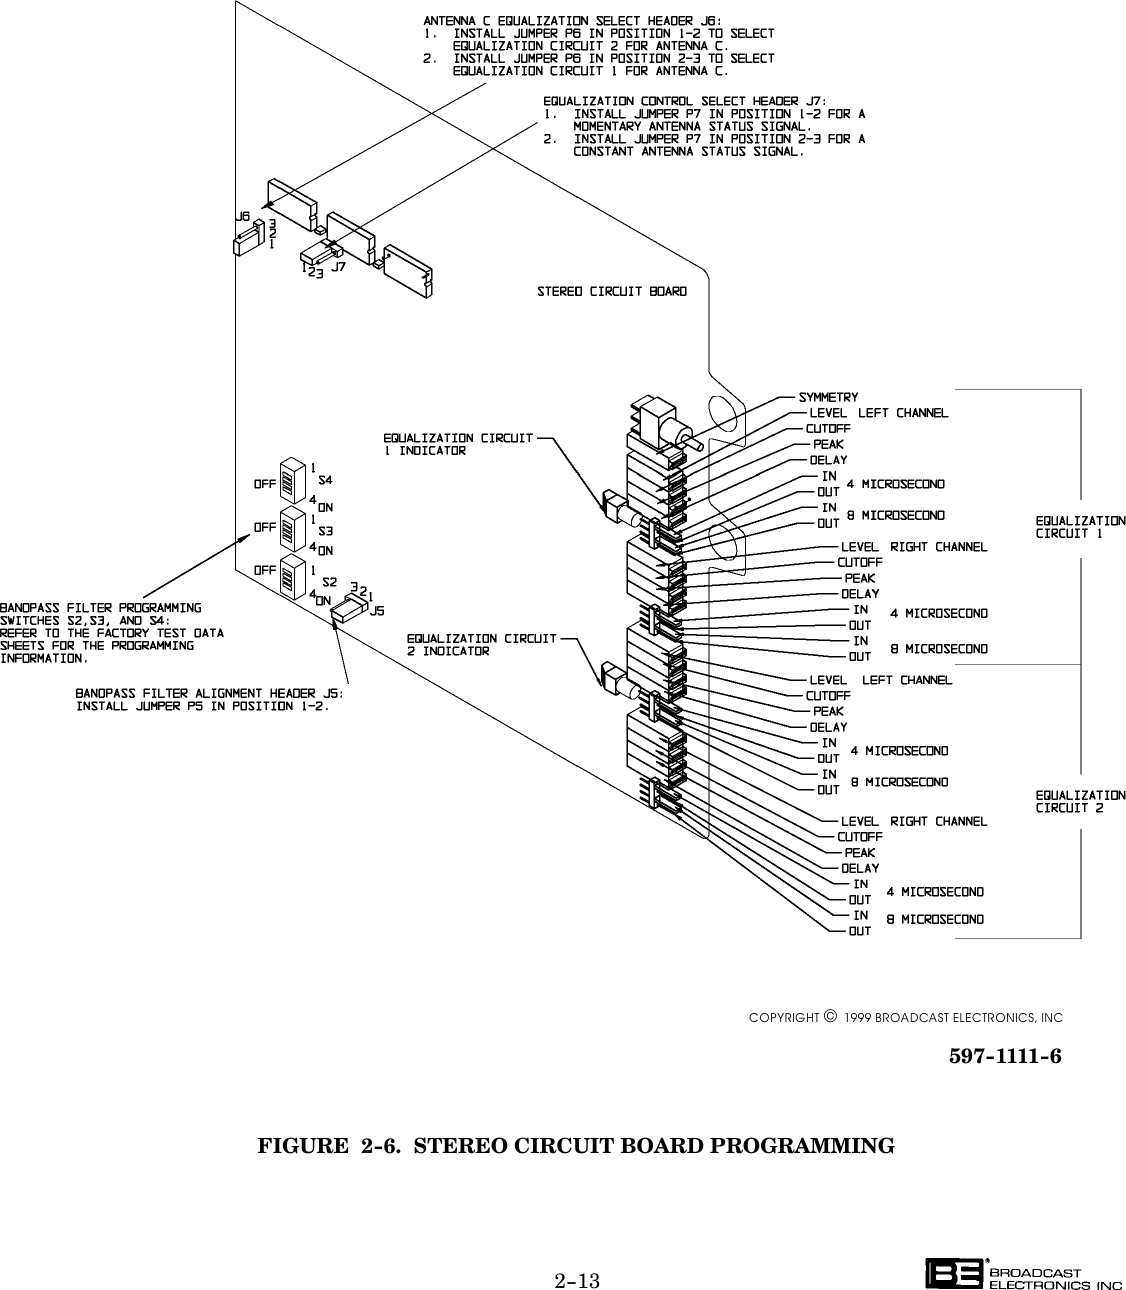 2-13597-1111-6FIGURE  2-6.  STEREO CIRCUIT BOARD PROGRAMMINGCOPYRIGHT  1999 BROADCAST ELECTRONICS, INC